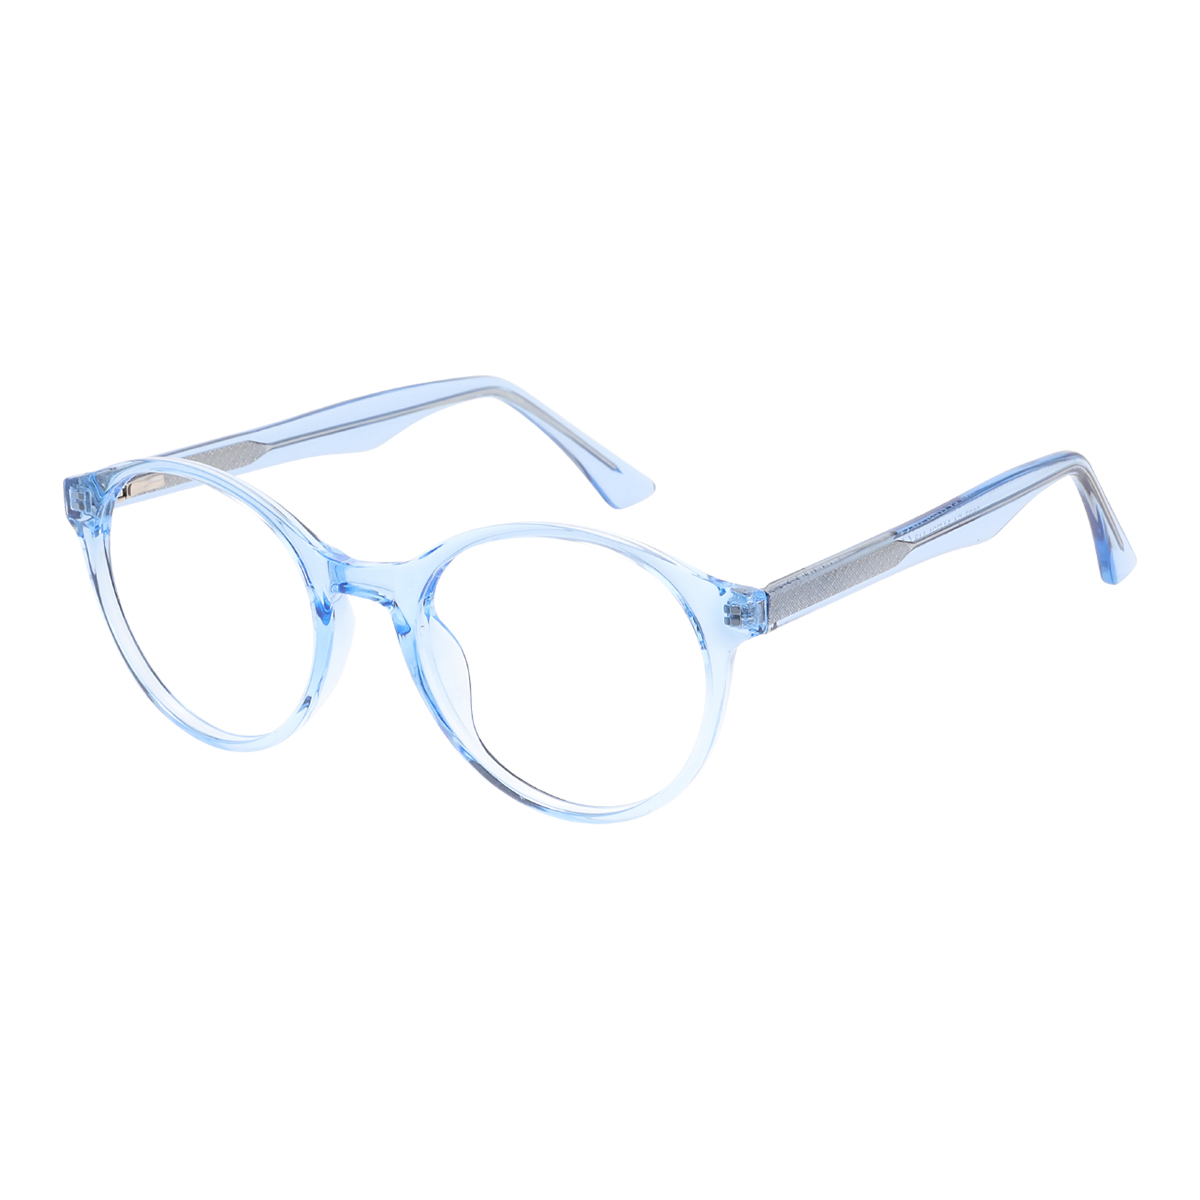 Delium - Round Blue Reading Glasses for Women